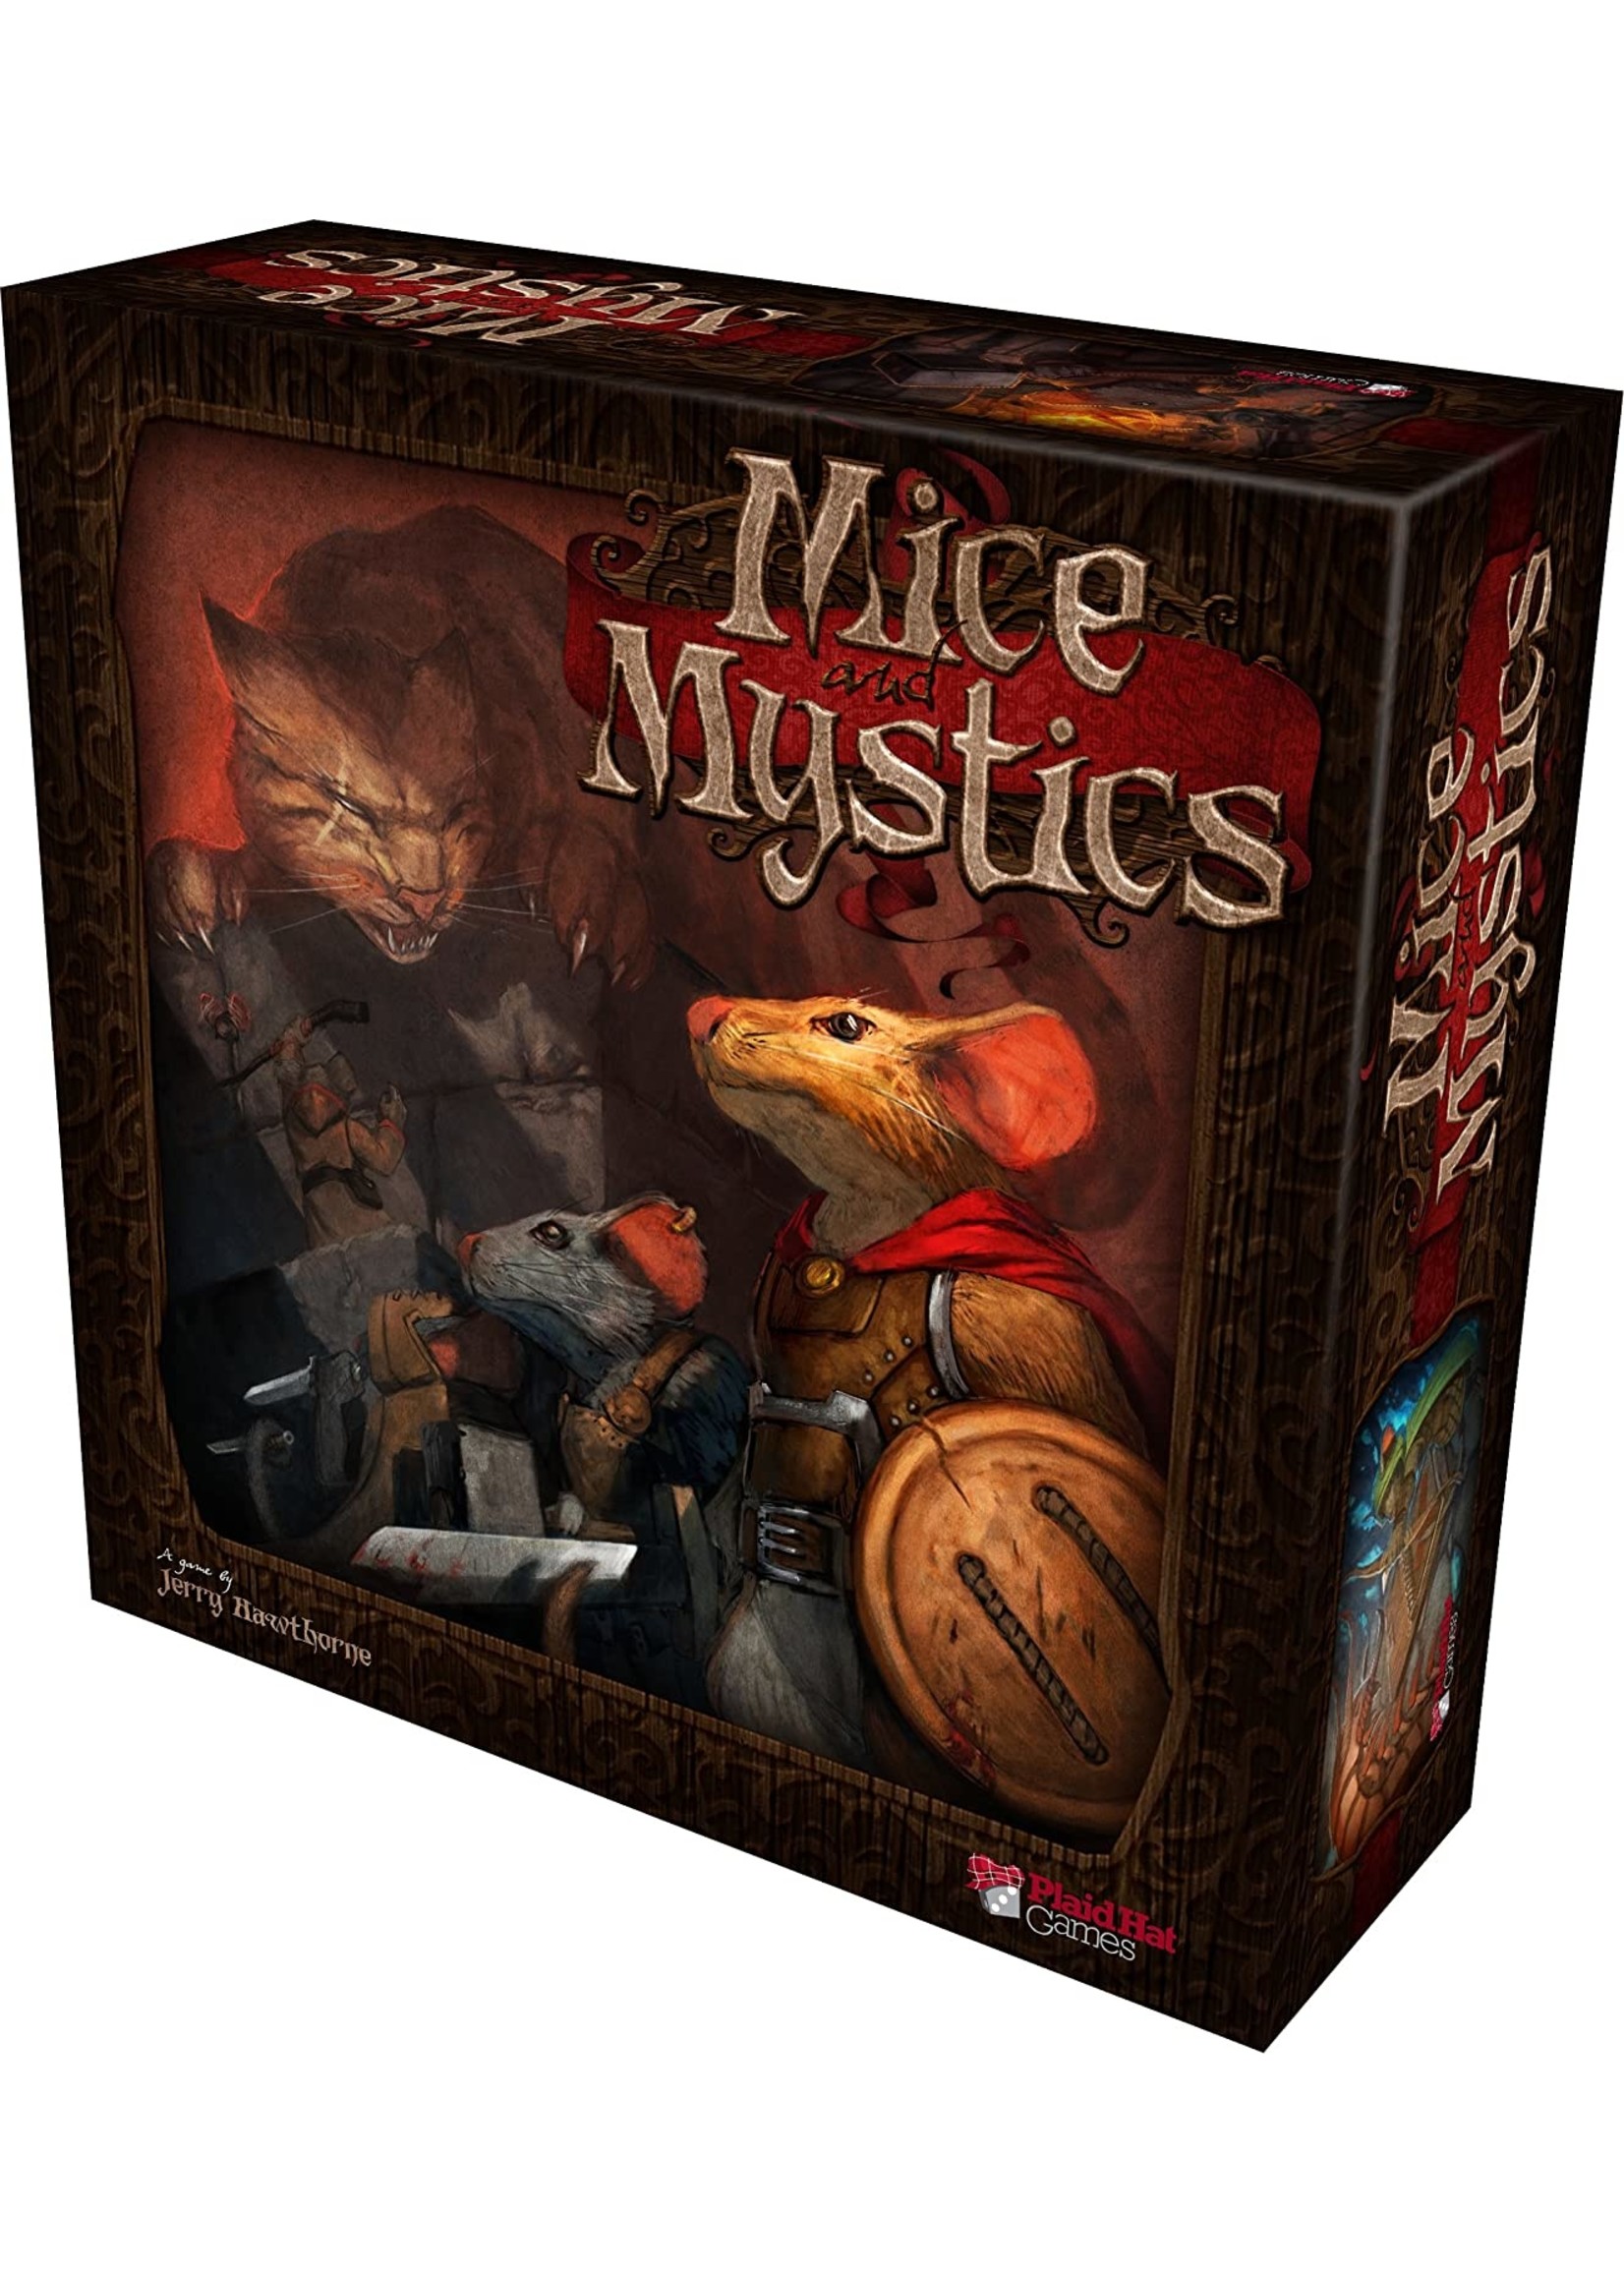 Mice & Mystics